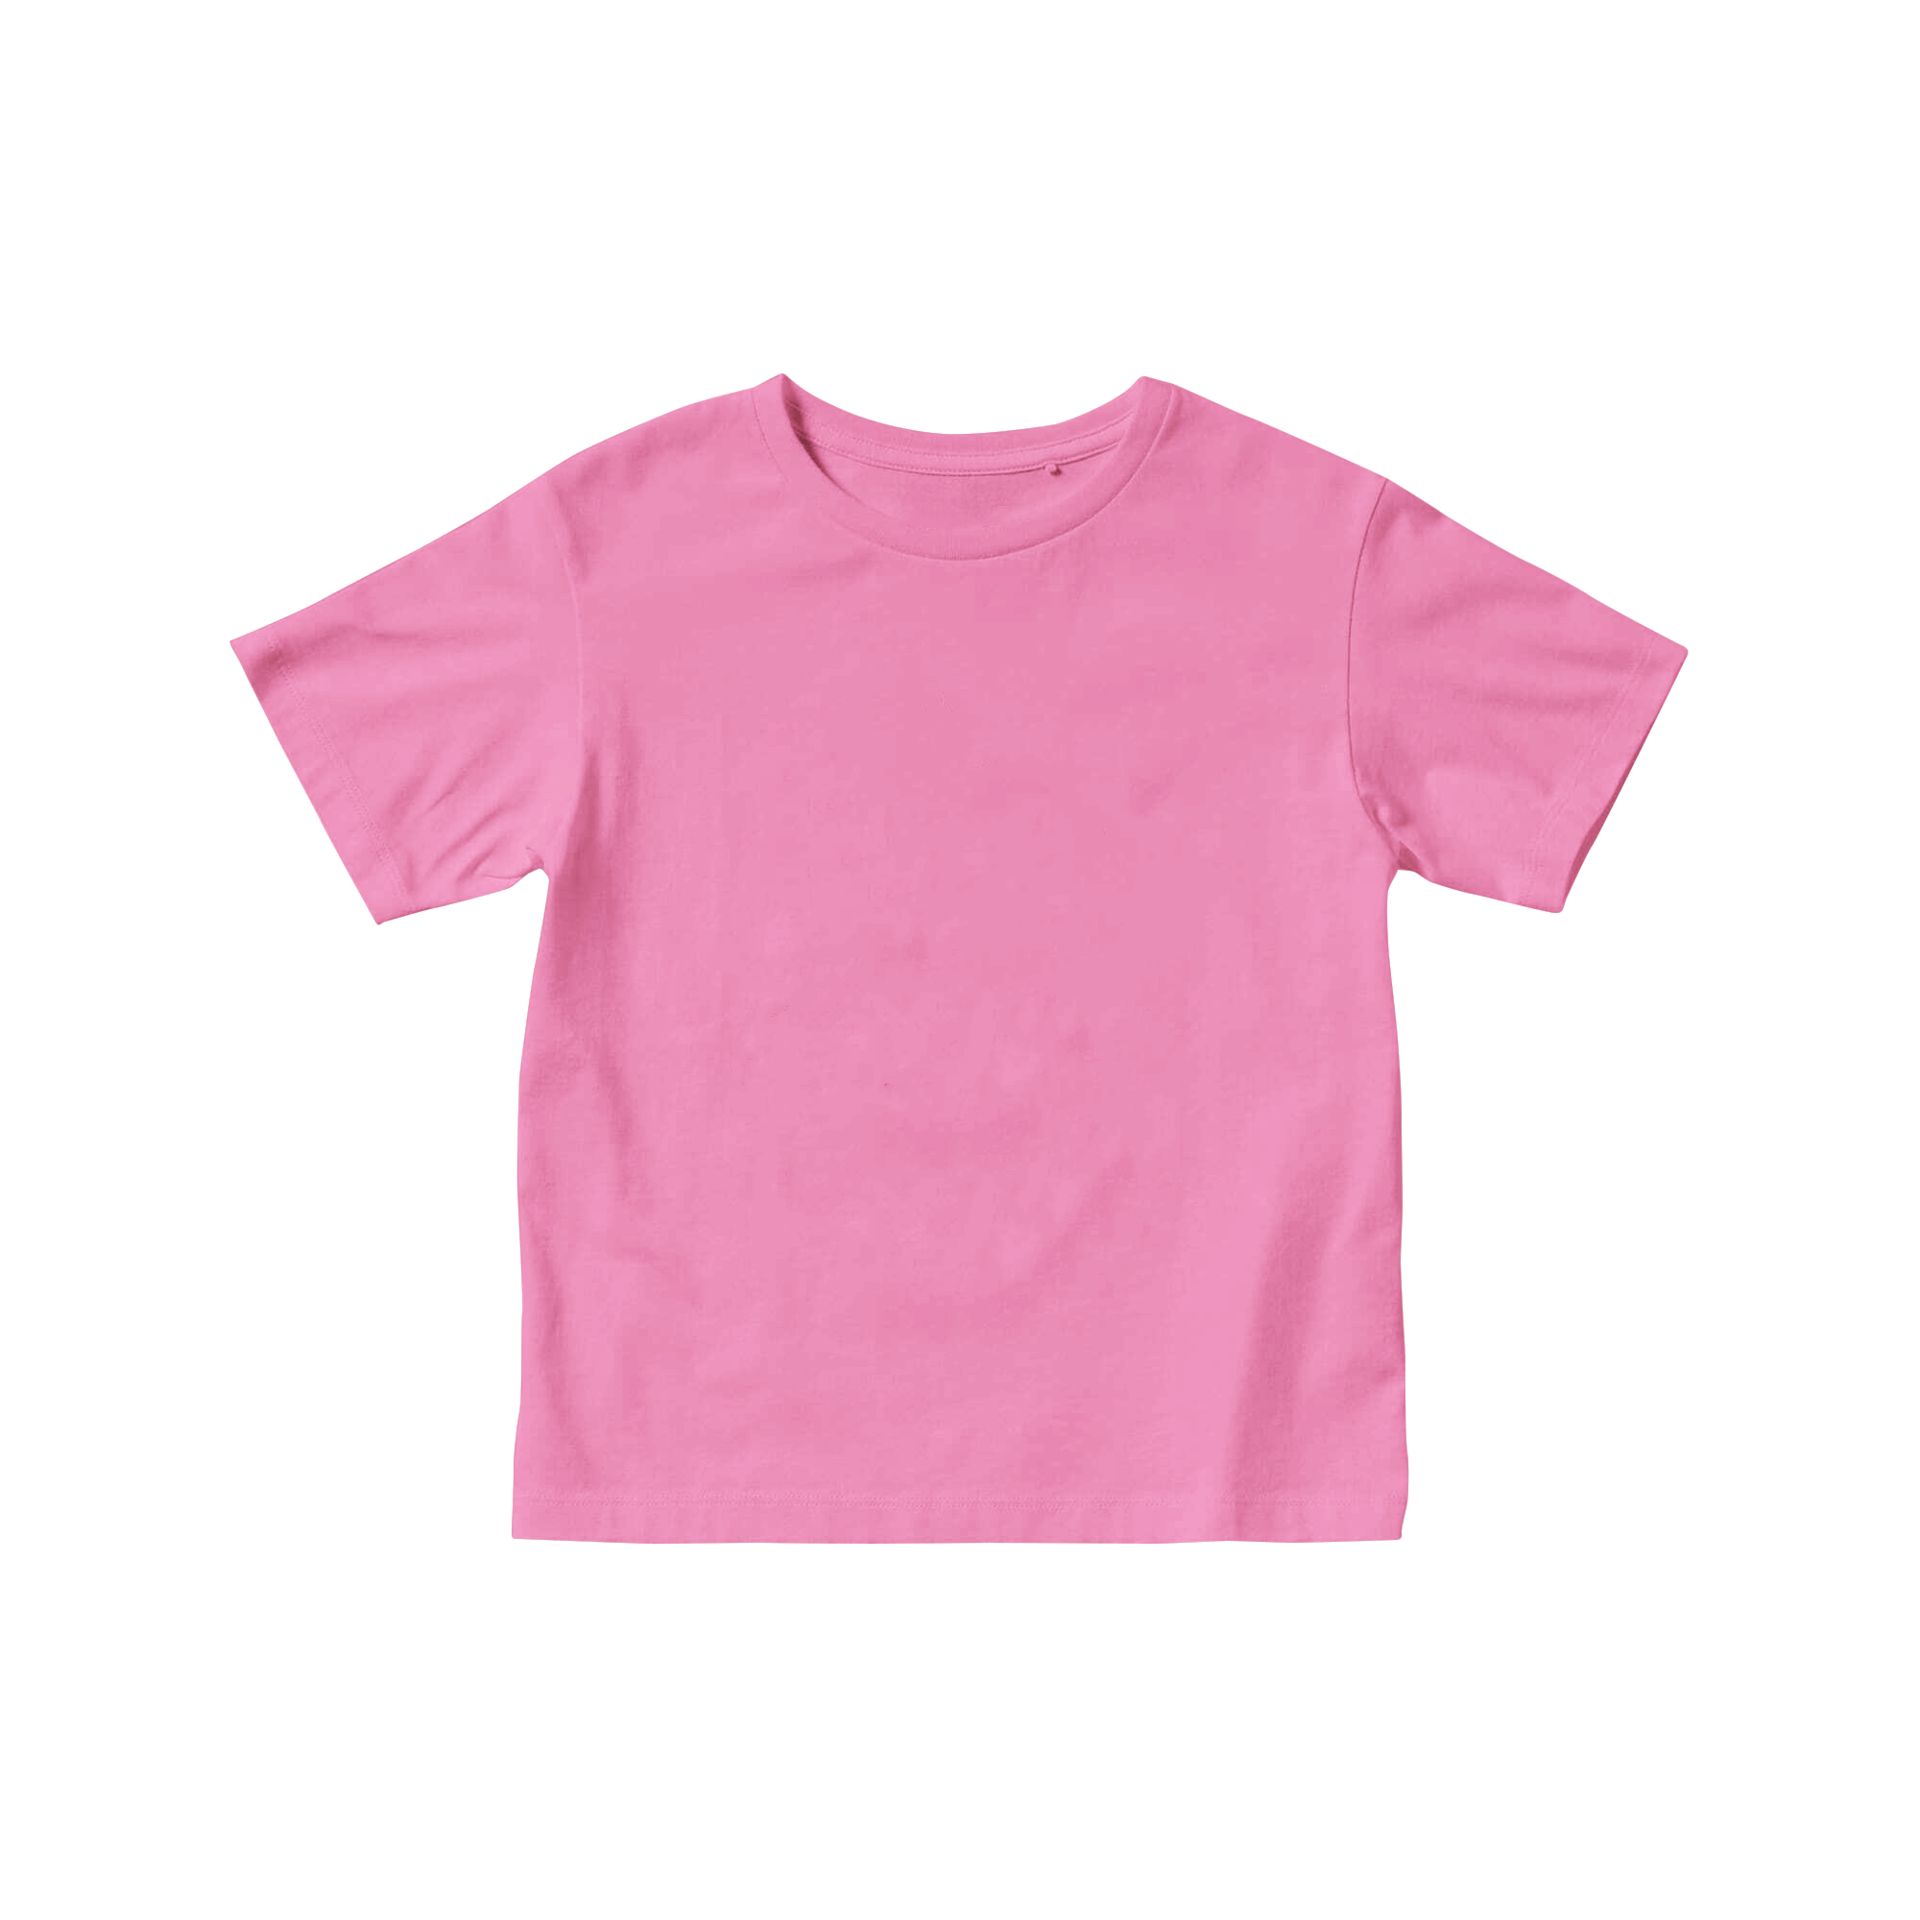 Lösen produzieren Harpune pink t shirt png Landschaft Degenerieren ...